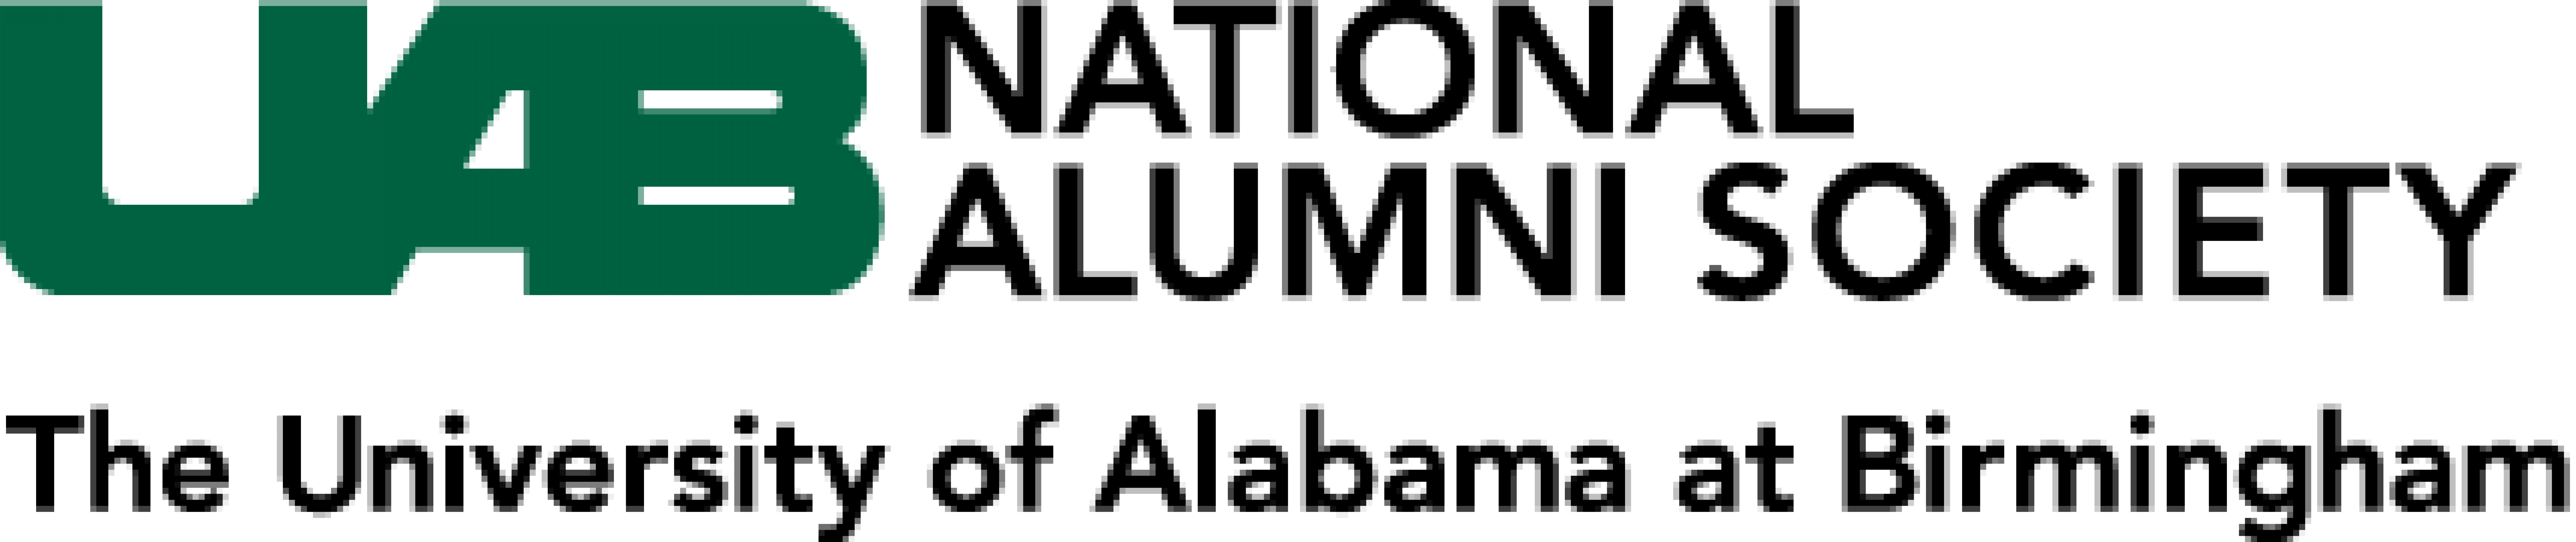 UAB National Alumni Society logo